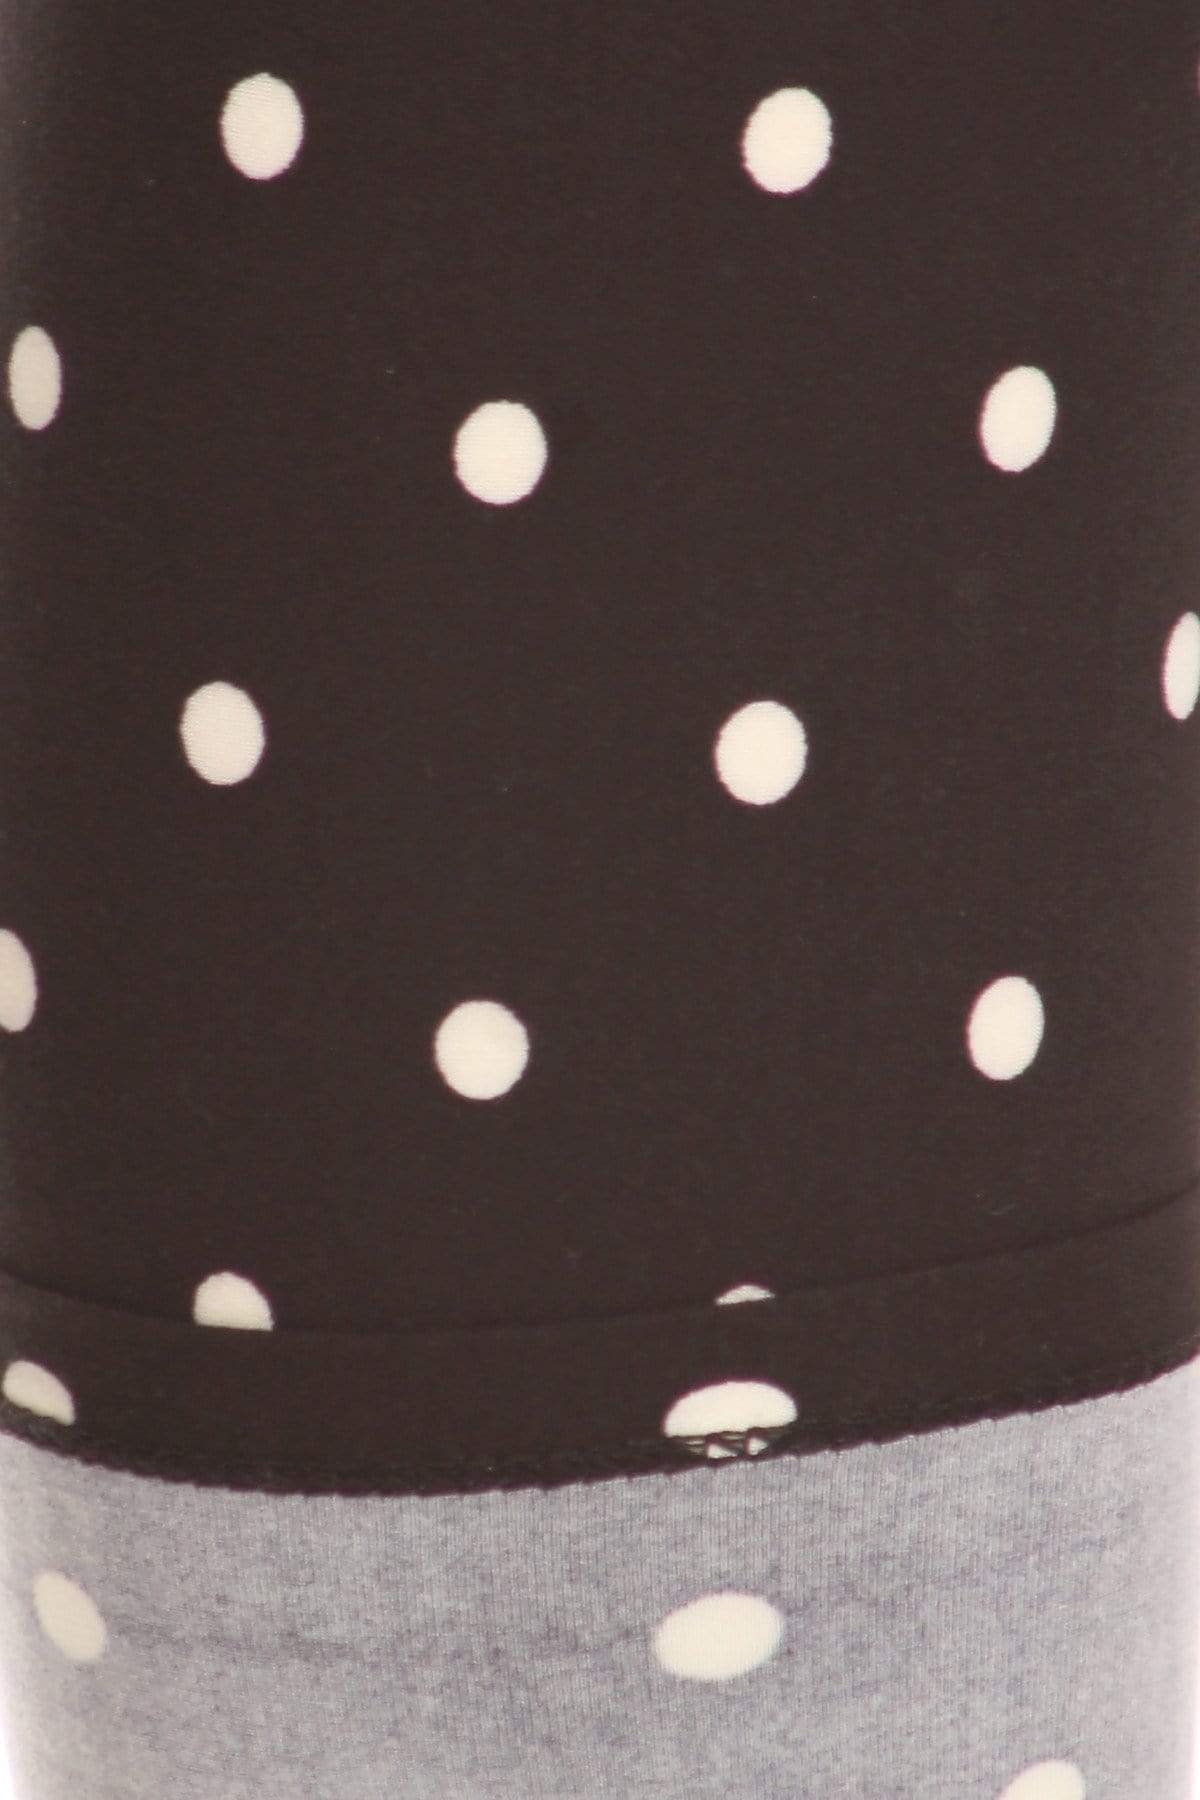 OxLaLa Leggings Black & White Polka Dots Black & White Polka Dots - Soft, comfortable leggings. Beautiful designs and patterns. 